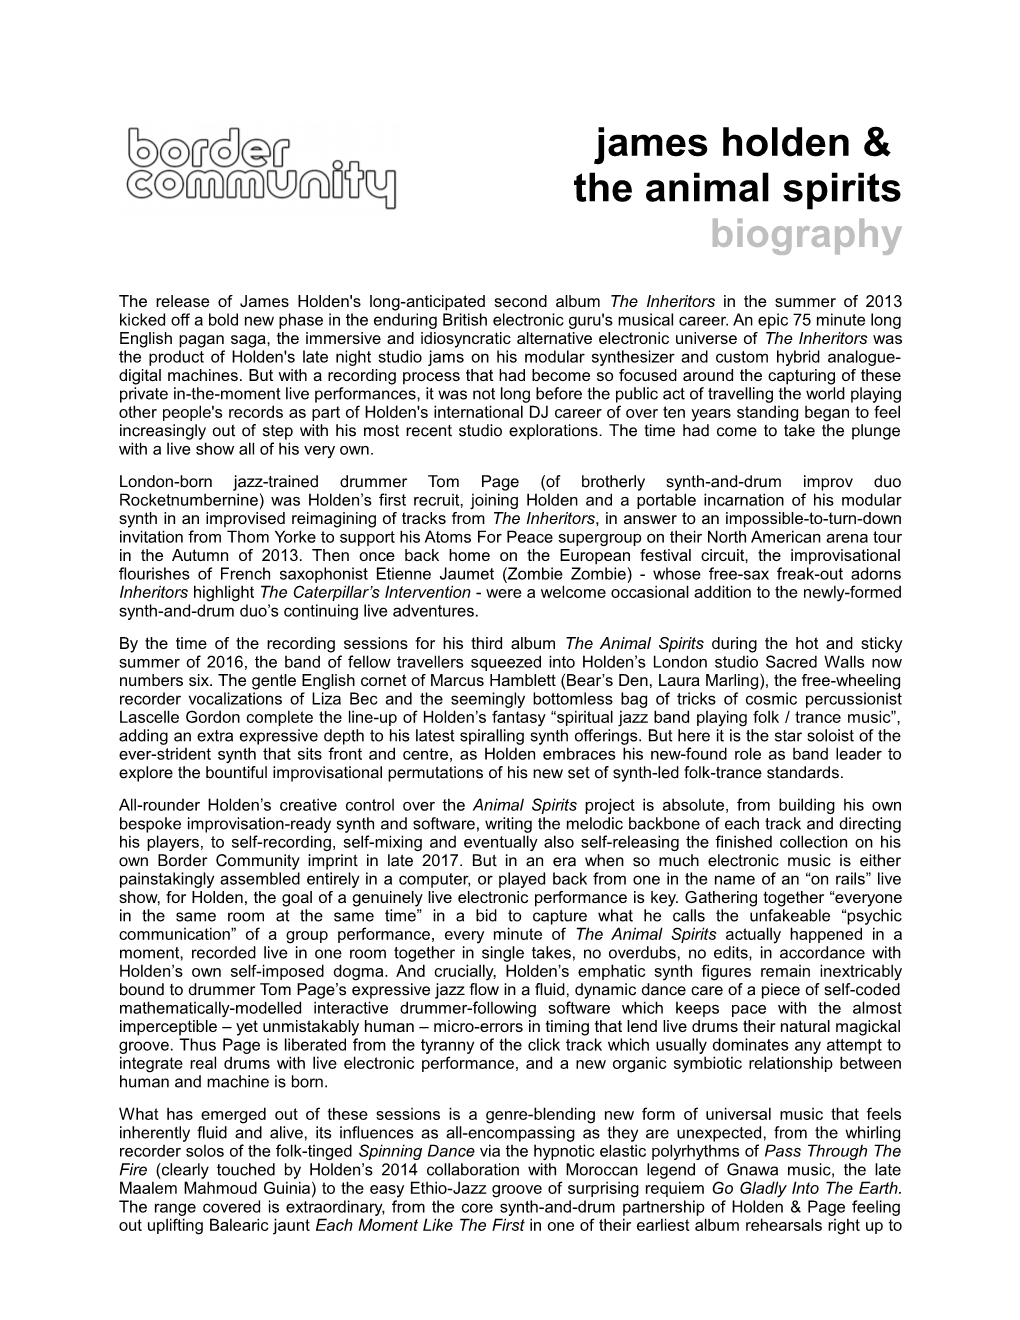 James Holden & the Animal Spirits Biography